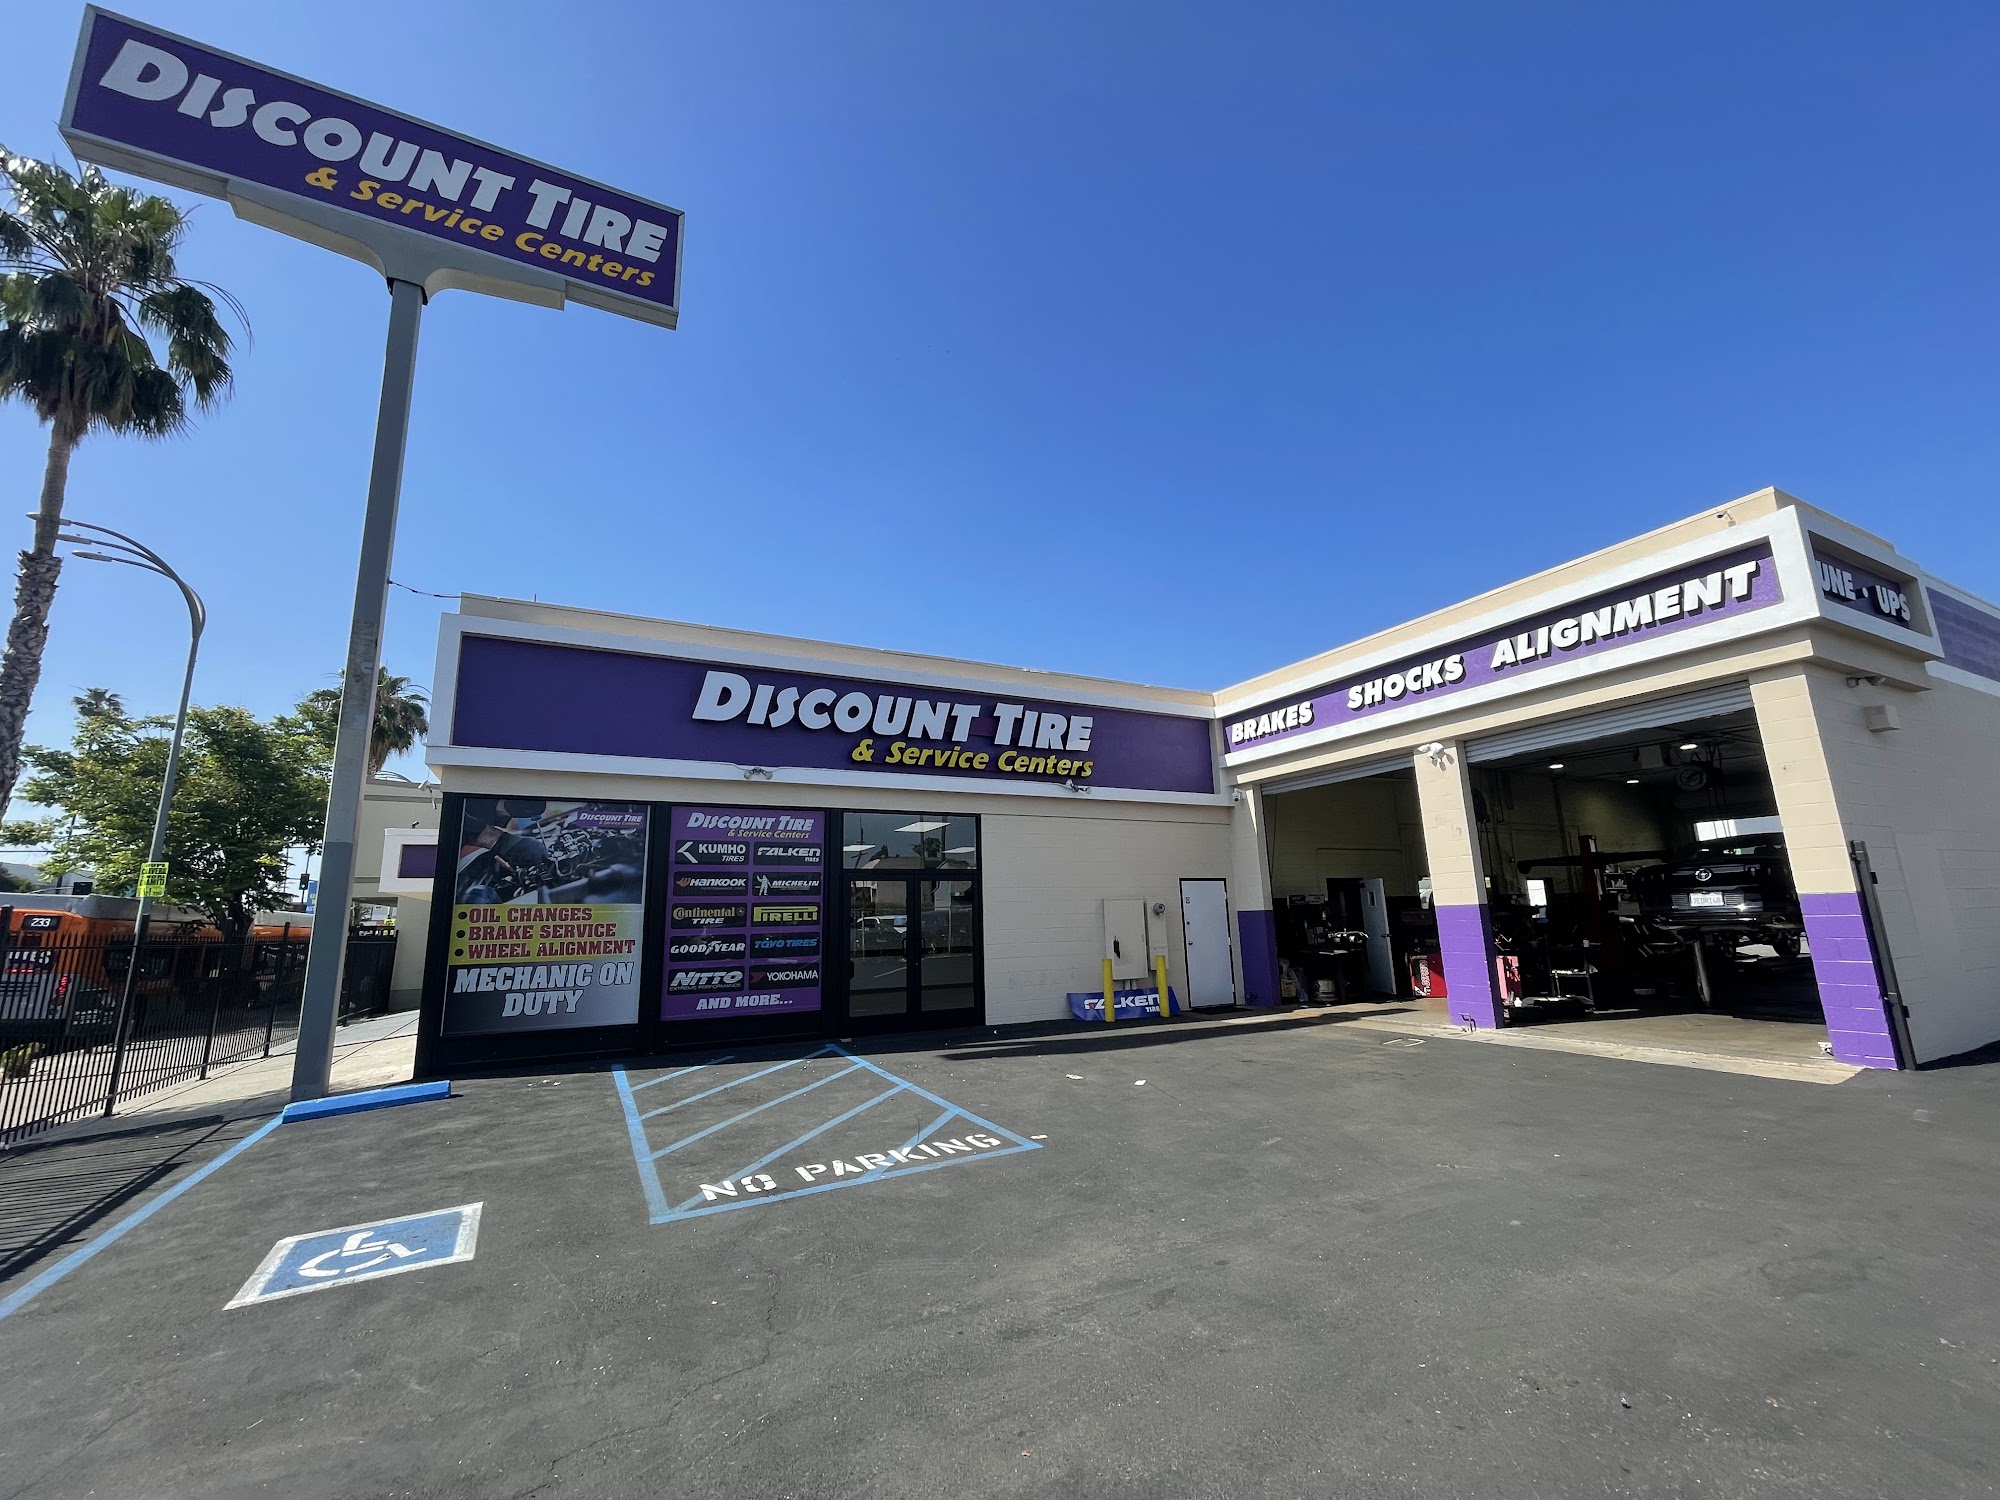 Discount Tire & service centers